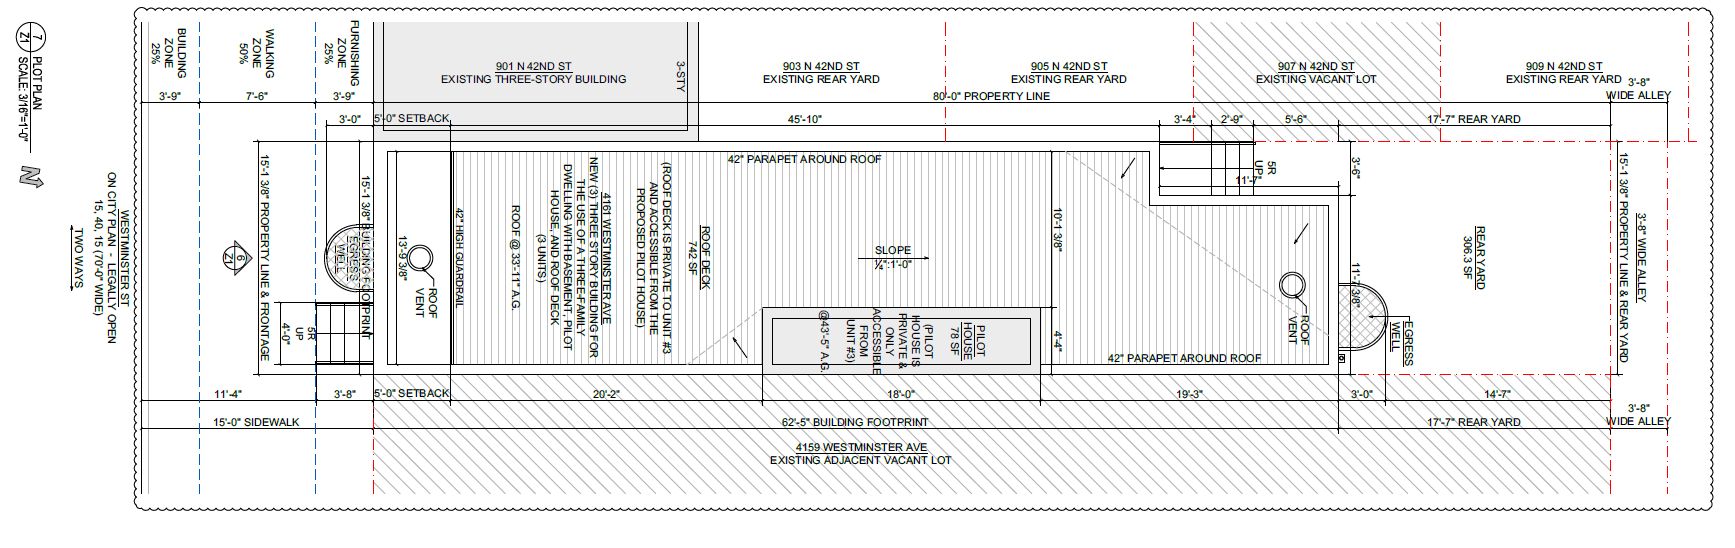 4161 Westminster Avenue. Site plan. Credit: JT Ran Expediting via the City of Philadelphia